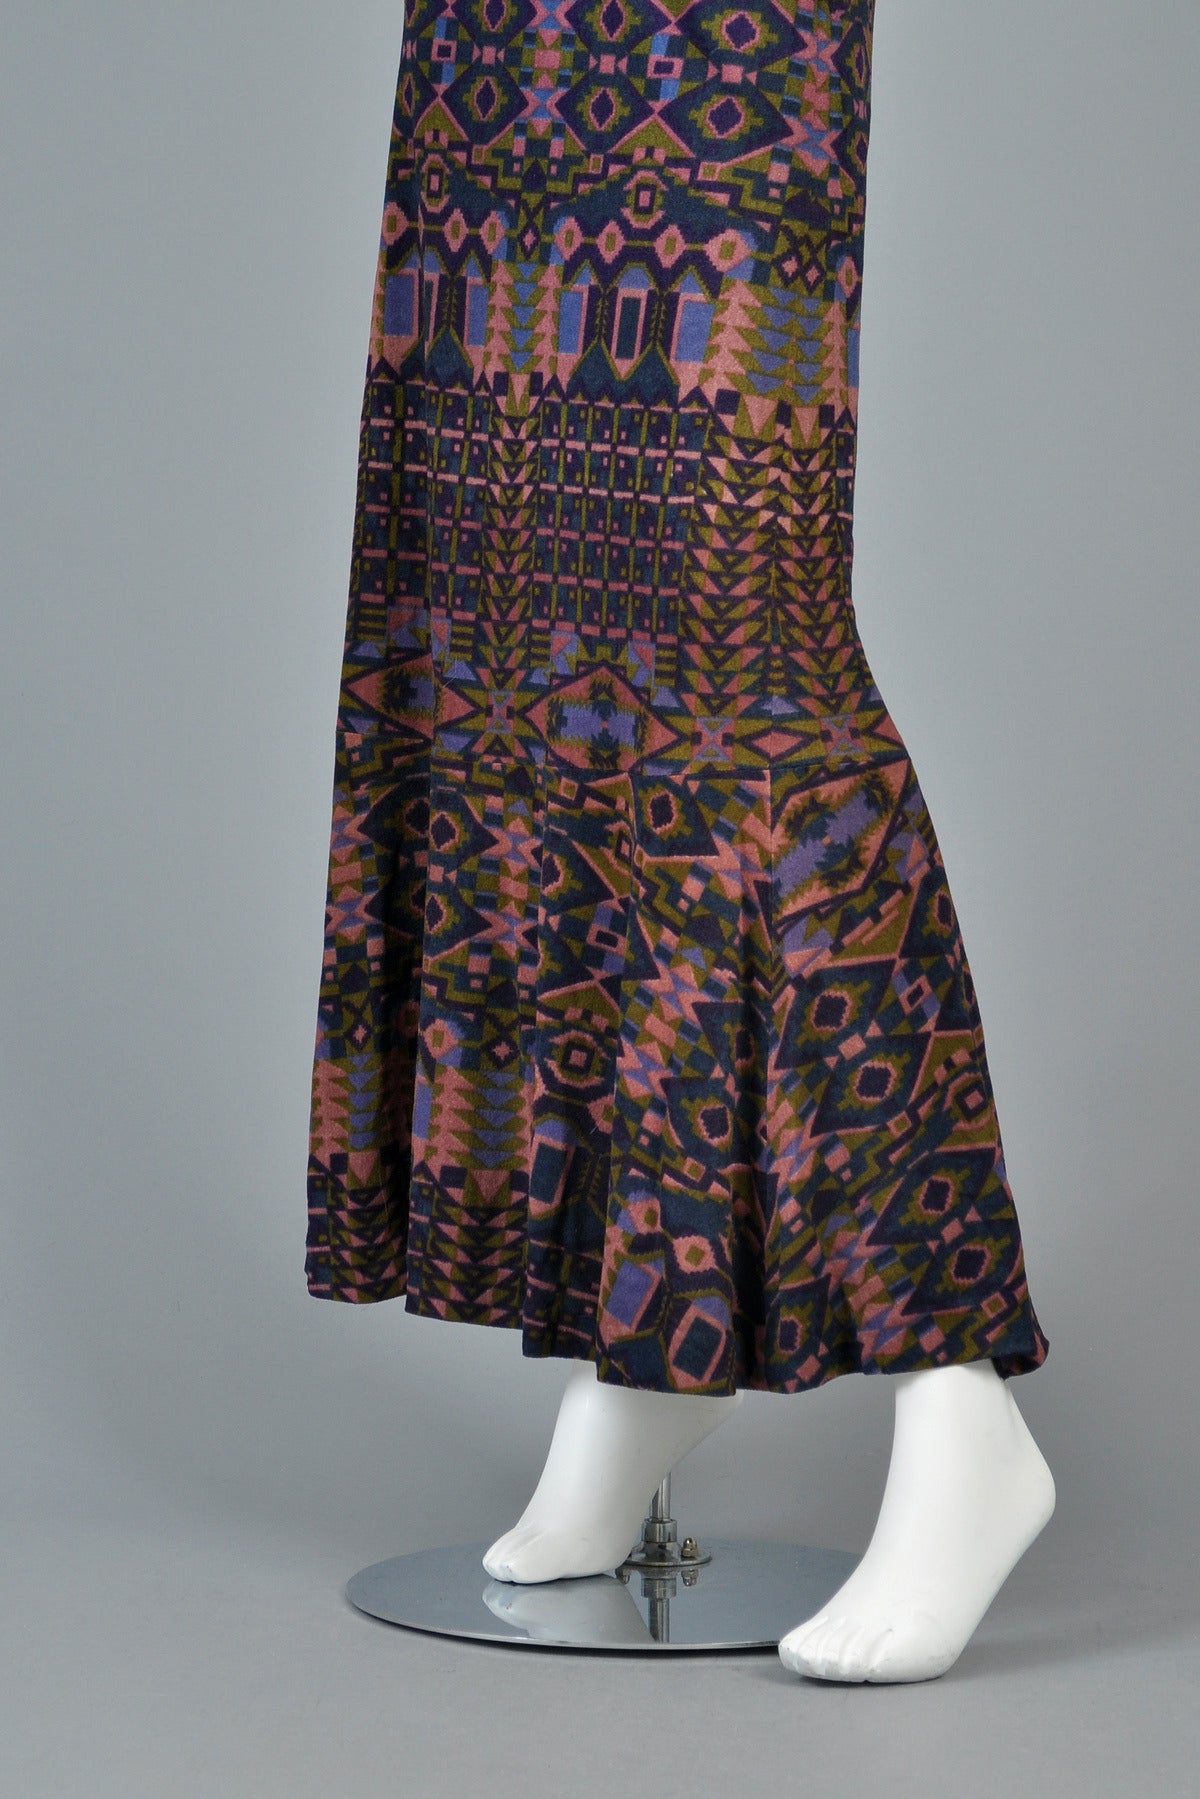 1969 Janice Wainwright Graphic Dress with Snood 3